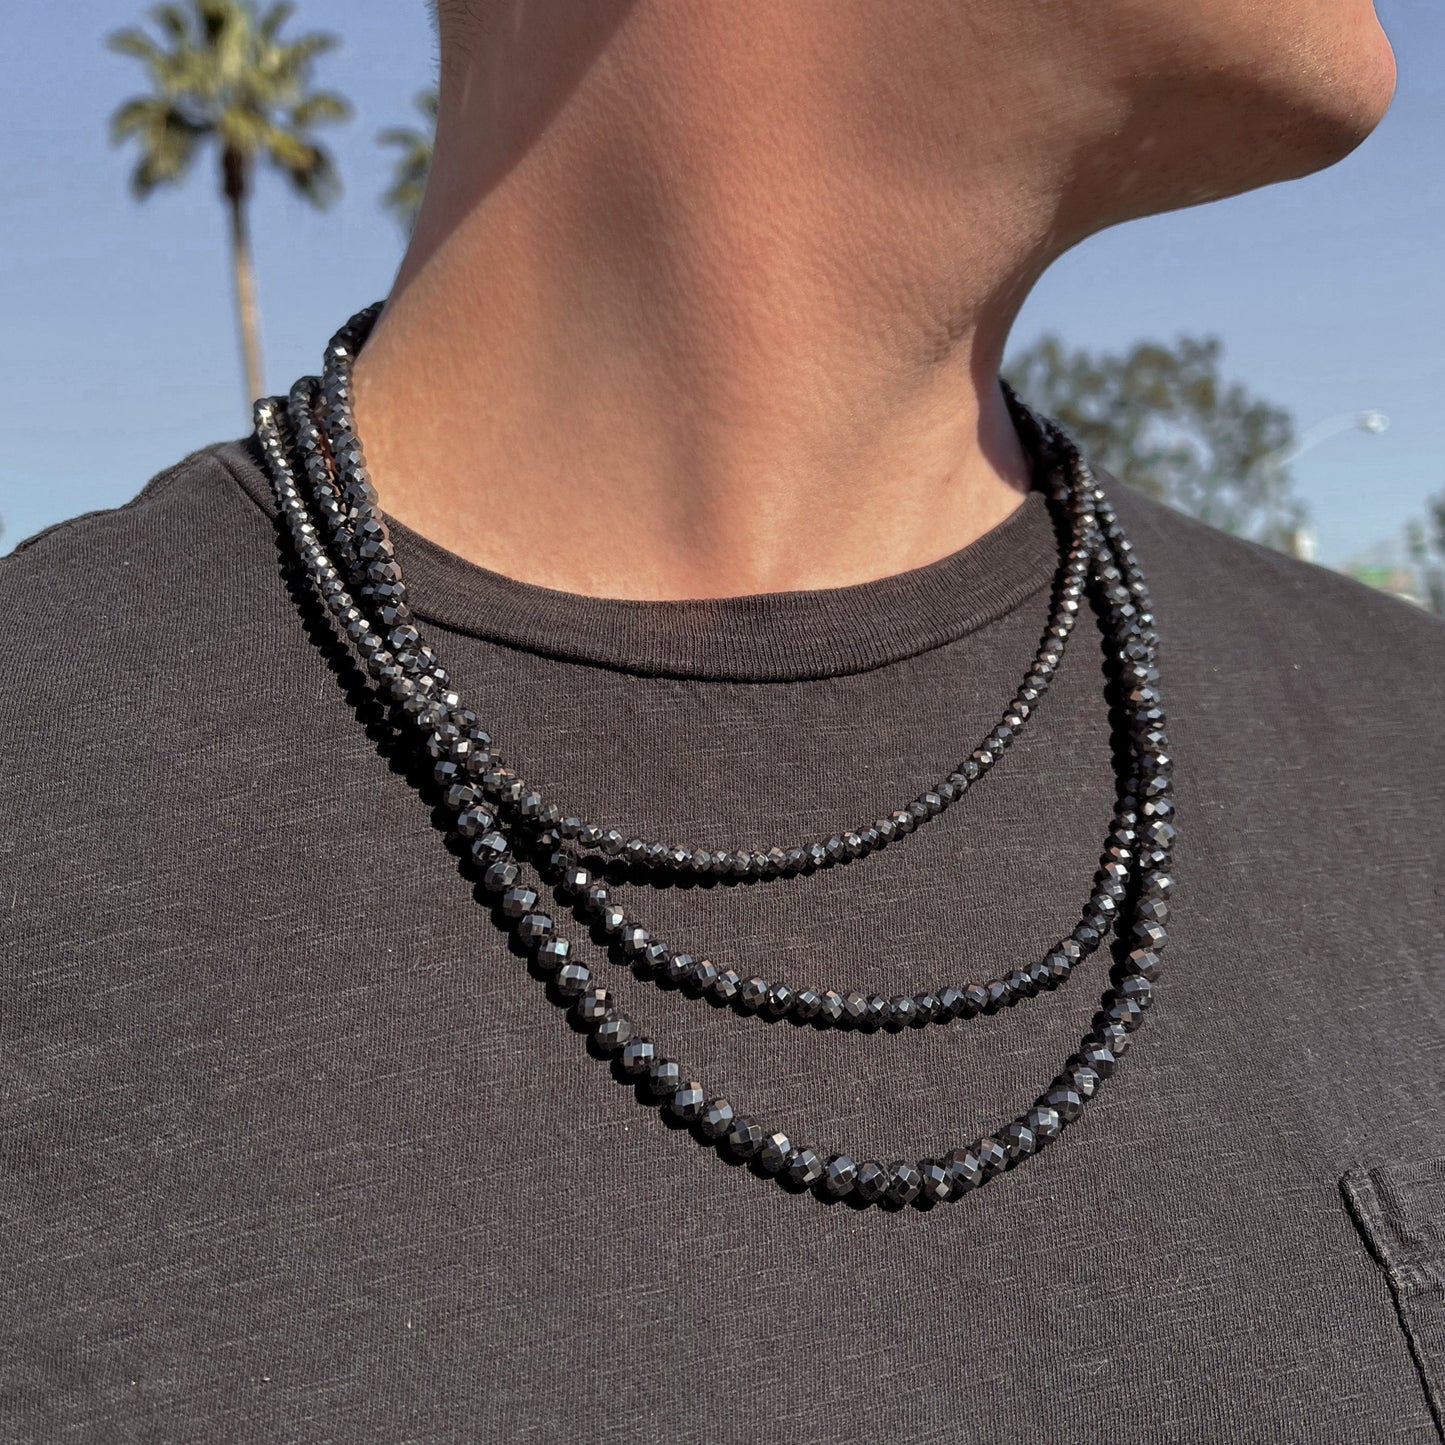 Mens 1/4 ctw Black Diamond Black Stainless Steel Cross Pendant Necklace -  Walmart.com